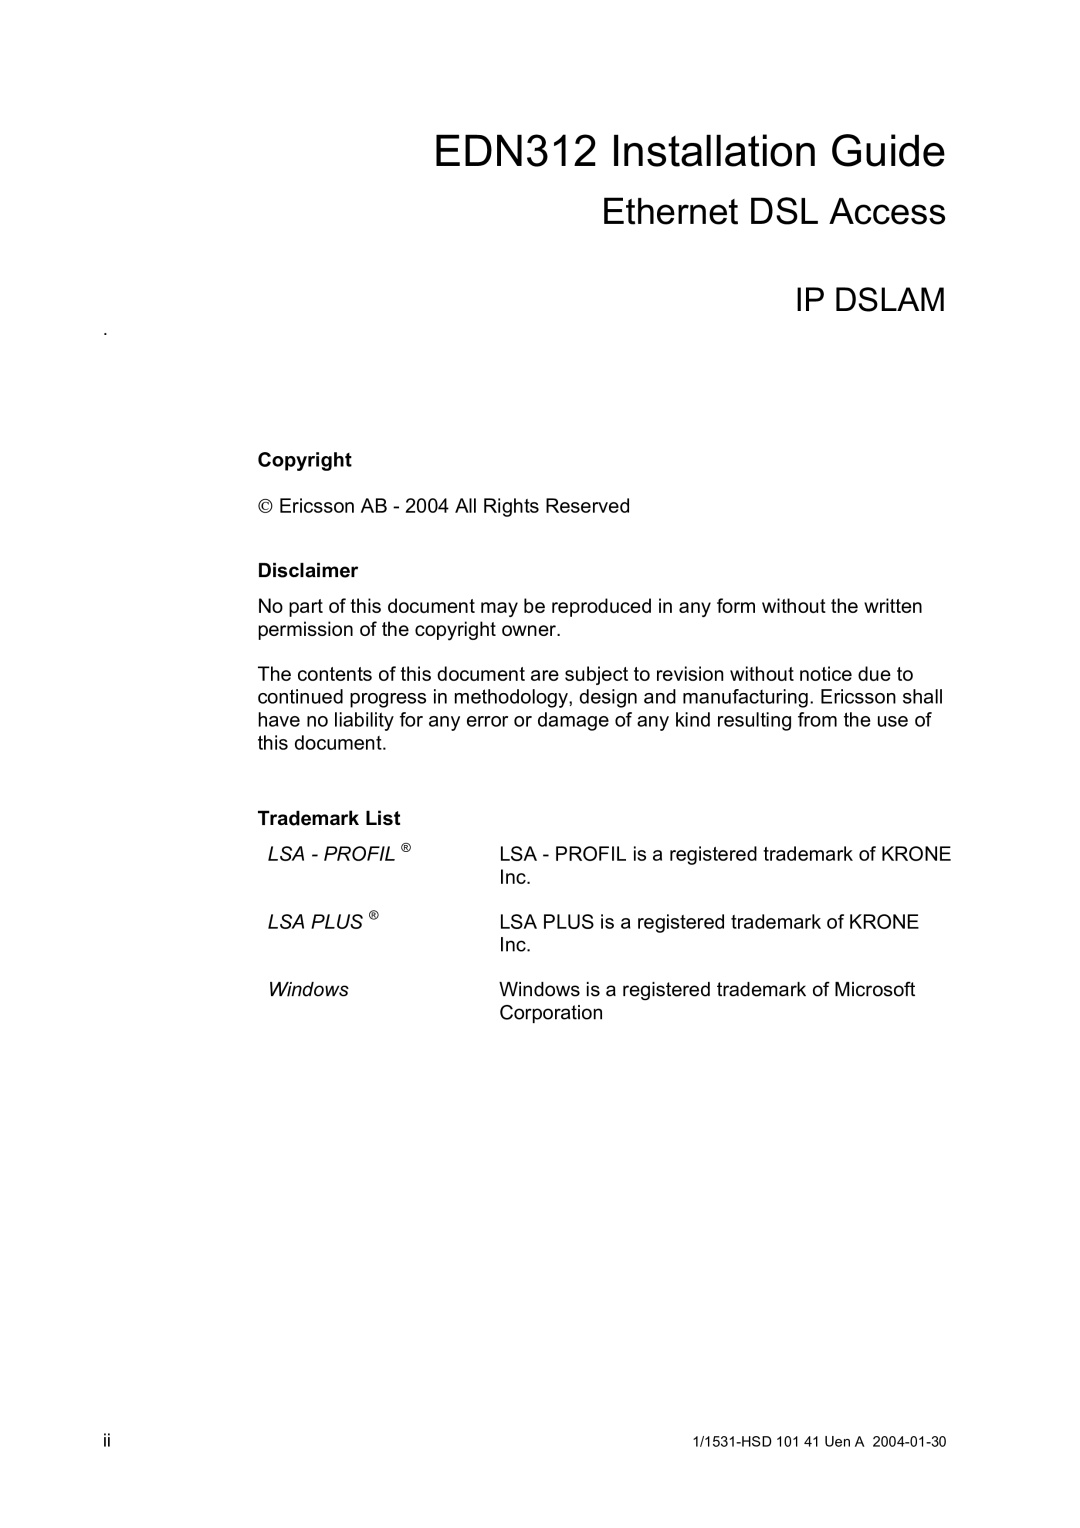 Ericsson IP DSLAM, EDN312 manual Copyright, Disclaimer 